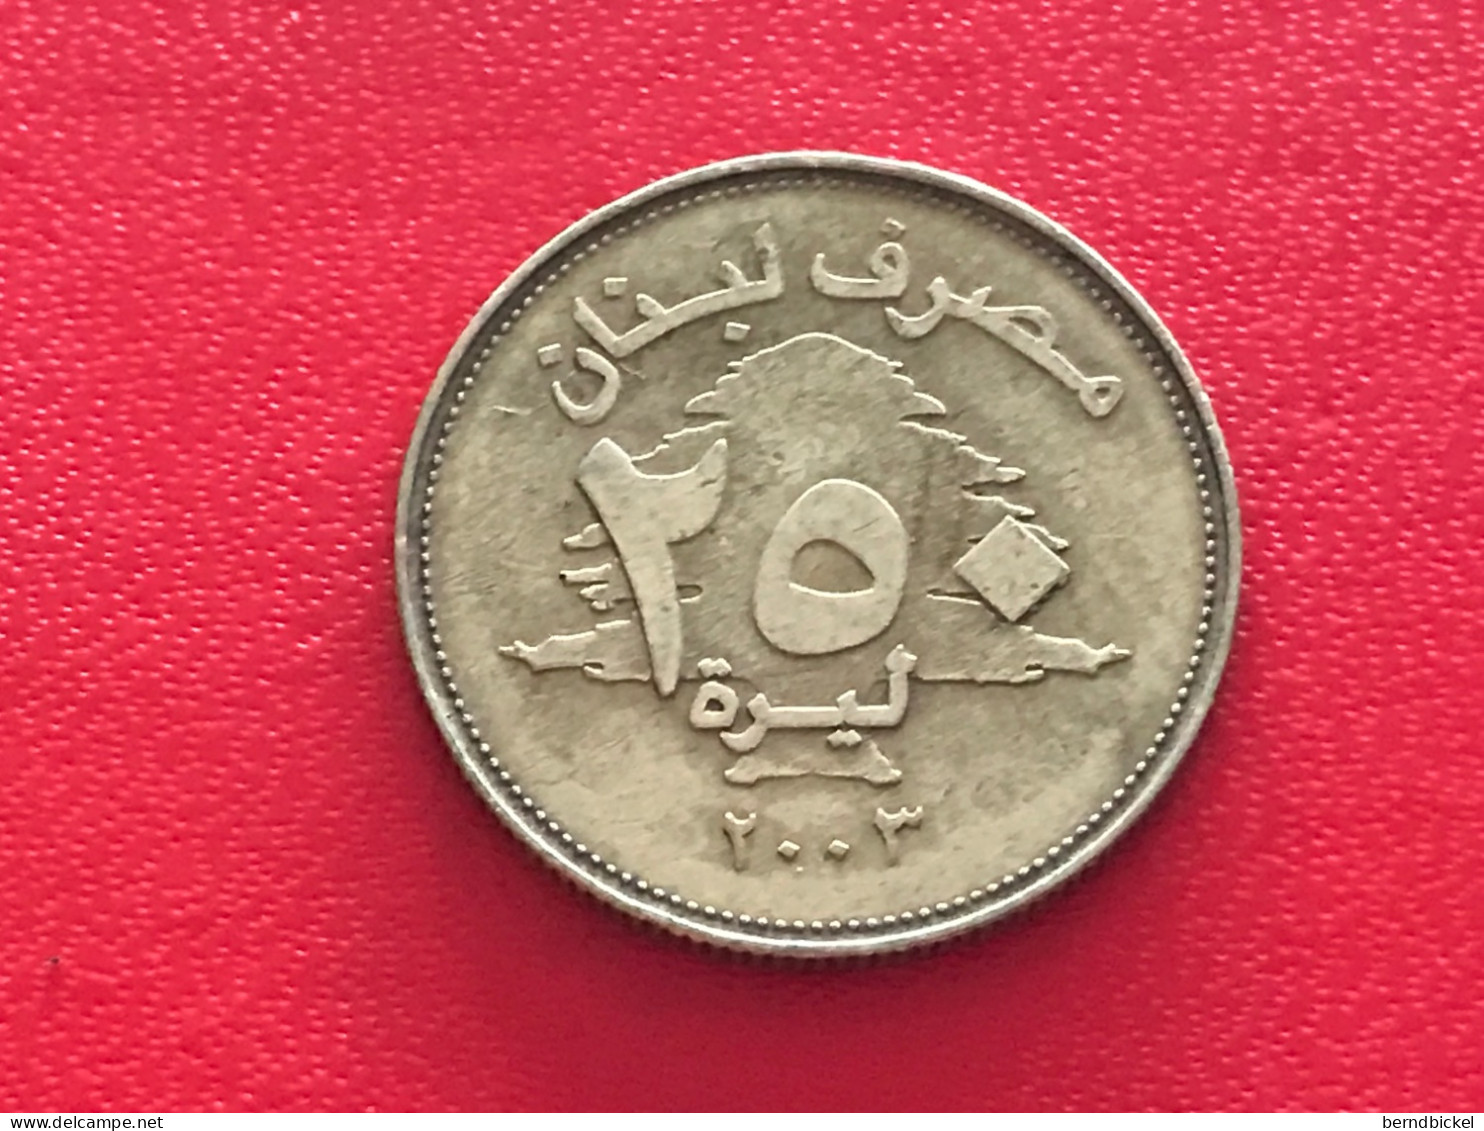 Münze Münzen Umlaufmünze Libanon 250 Livres 2003 - Liban